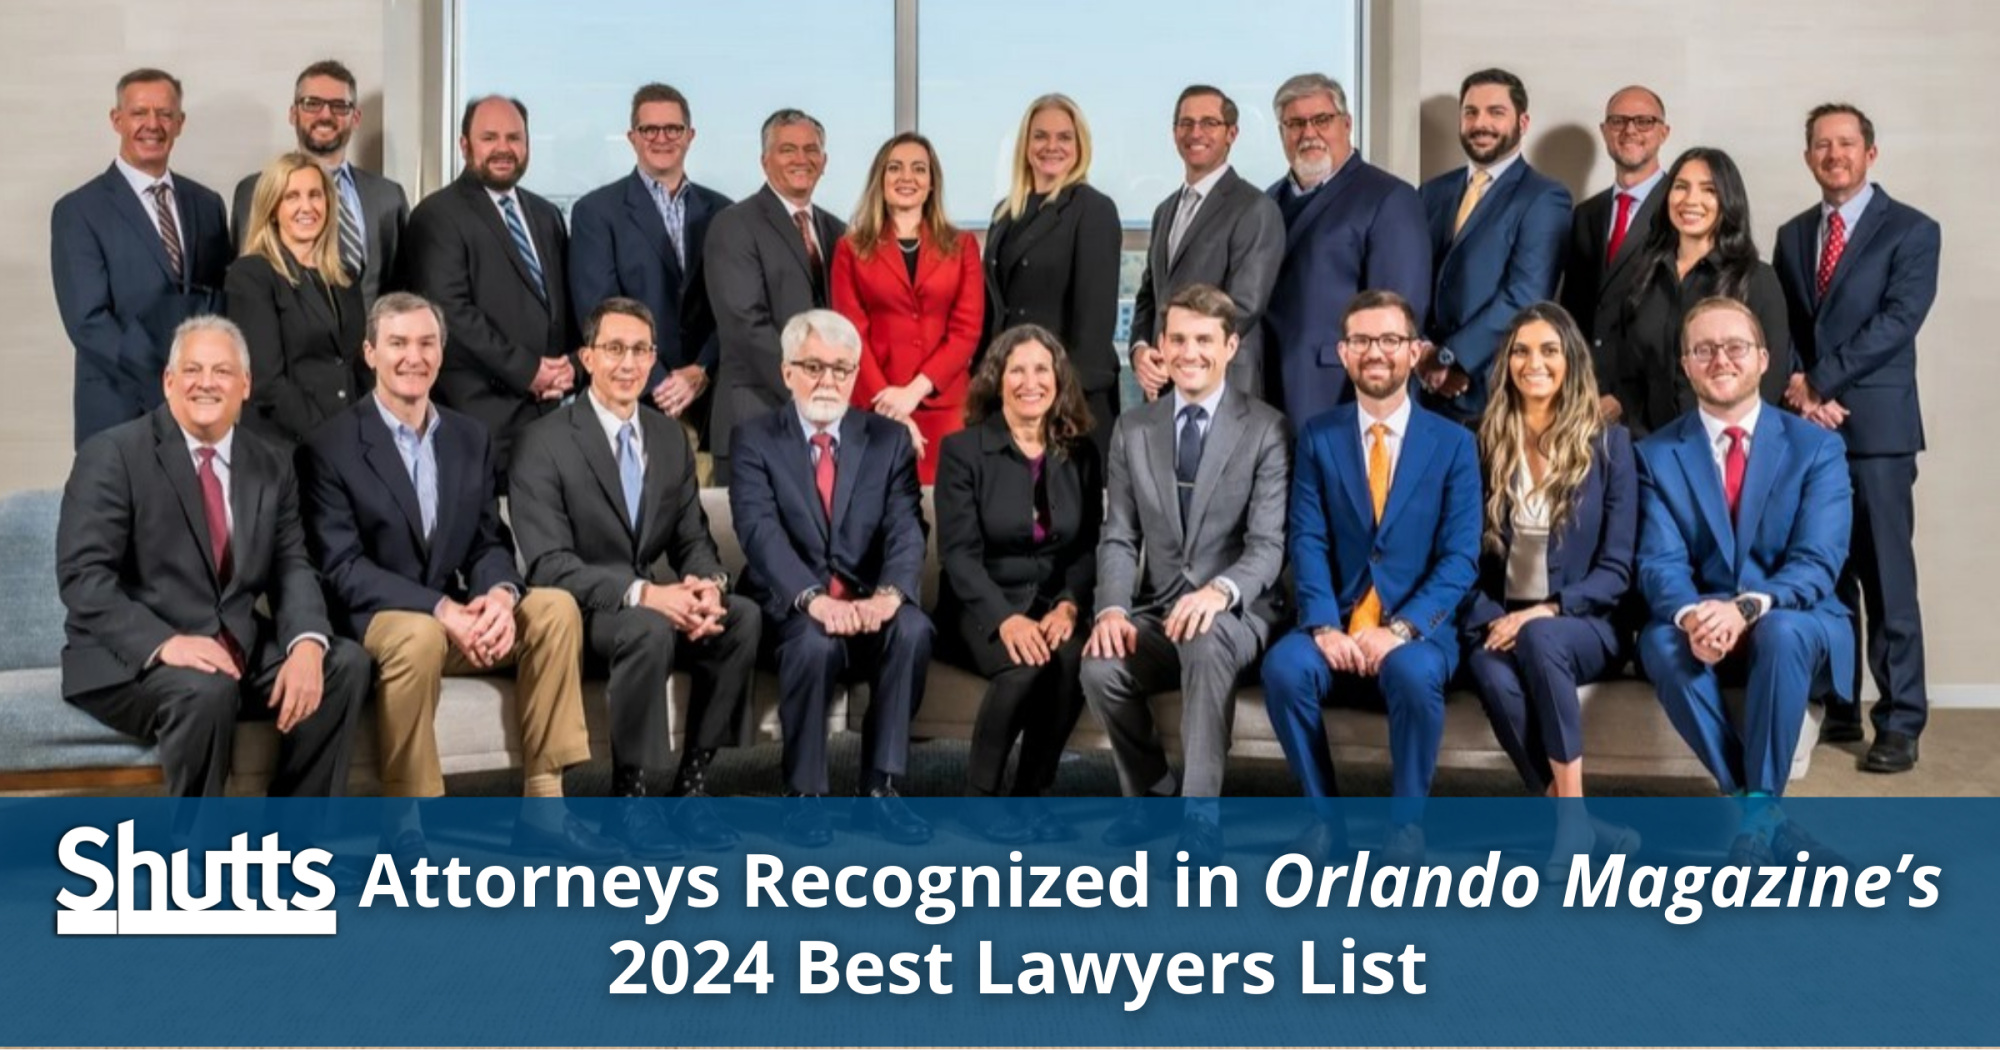 Shutts Attorneys Recognized in Orlando Magazine’s 2024 Best Lawyers List